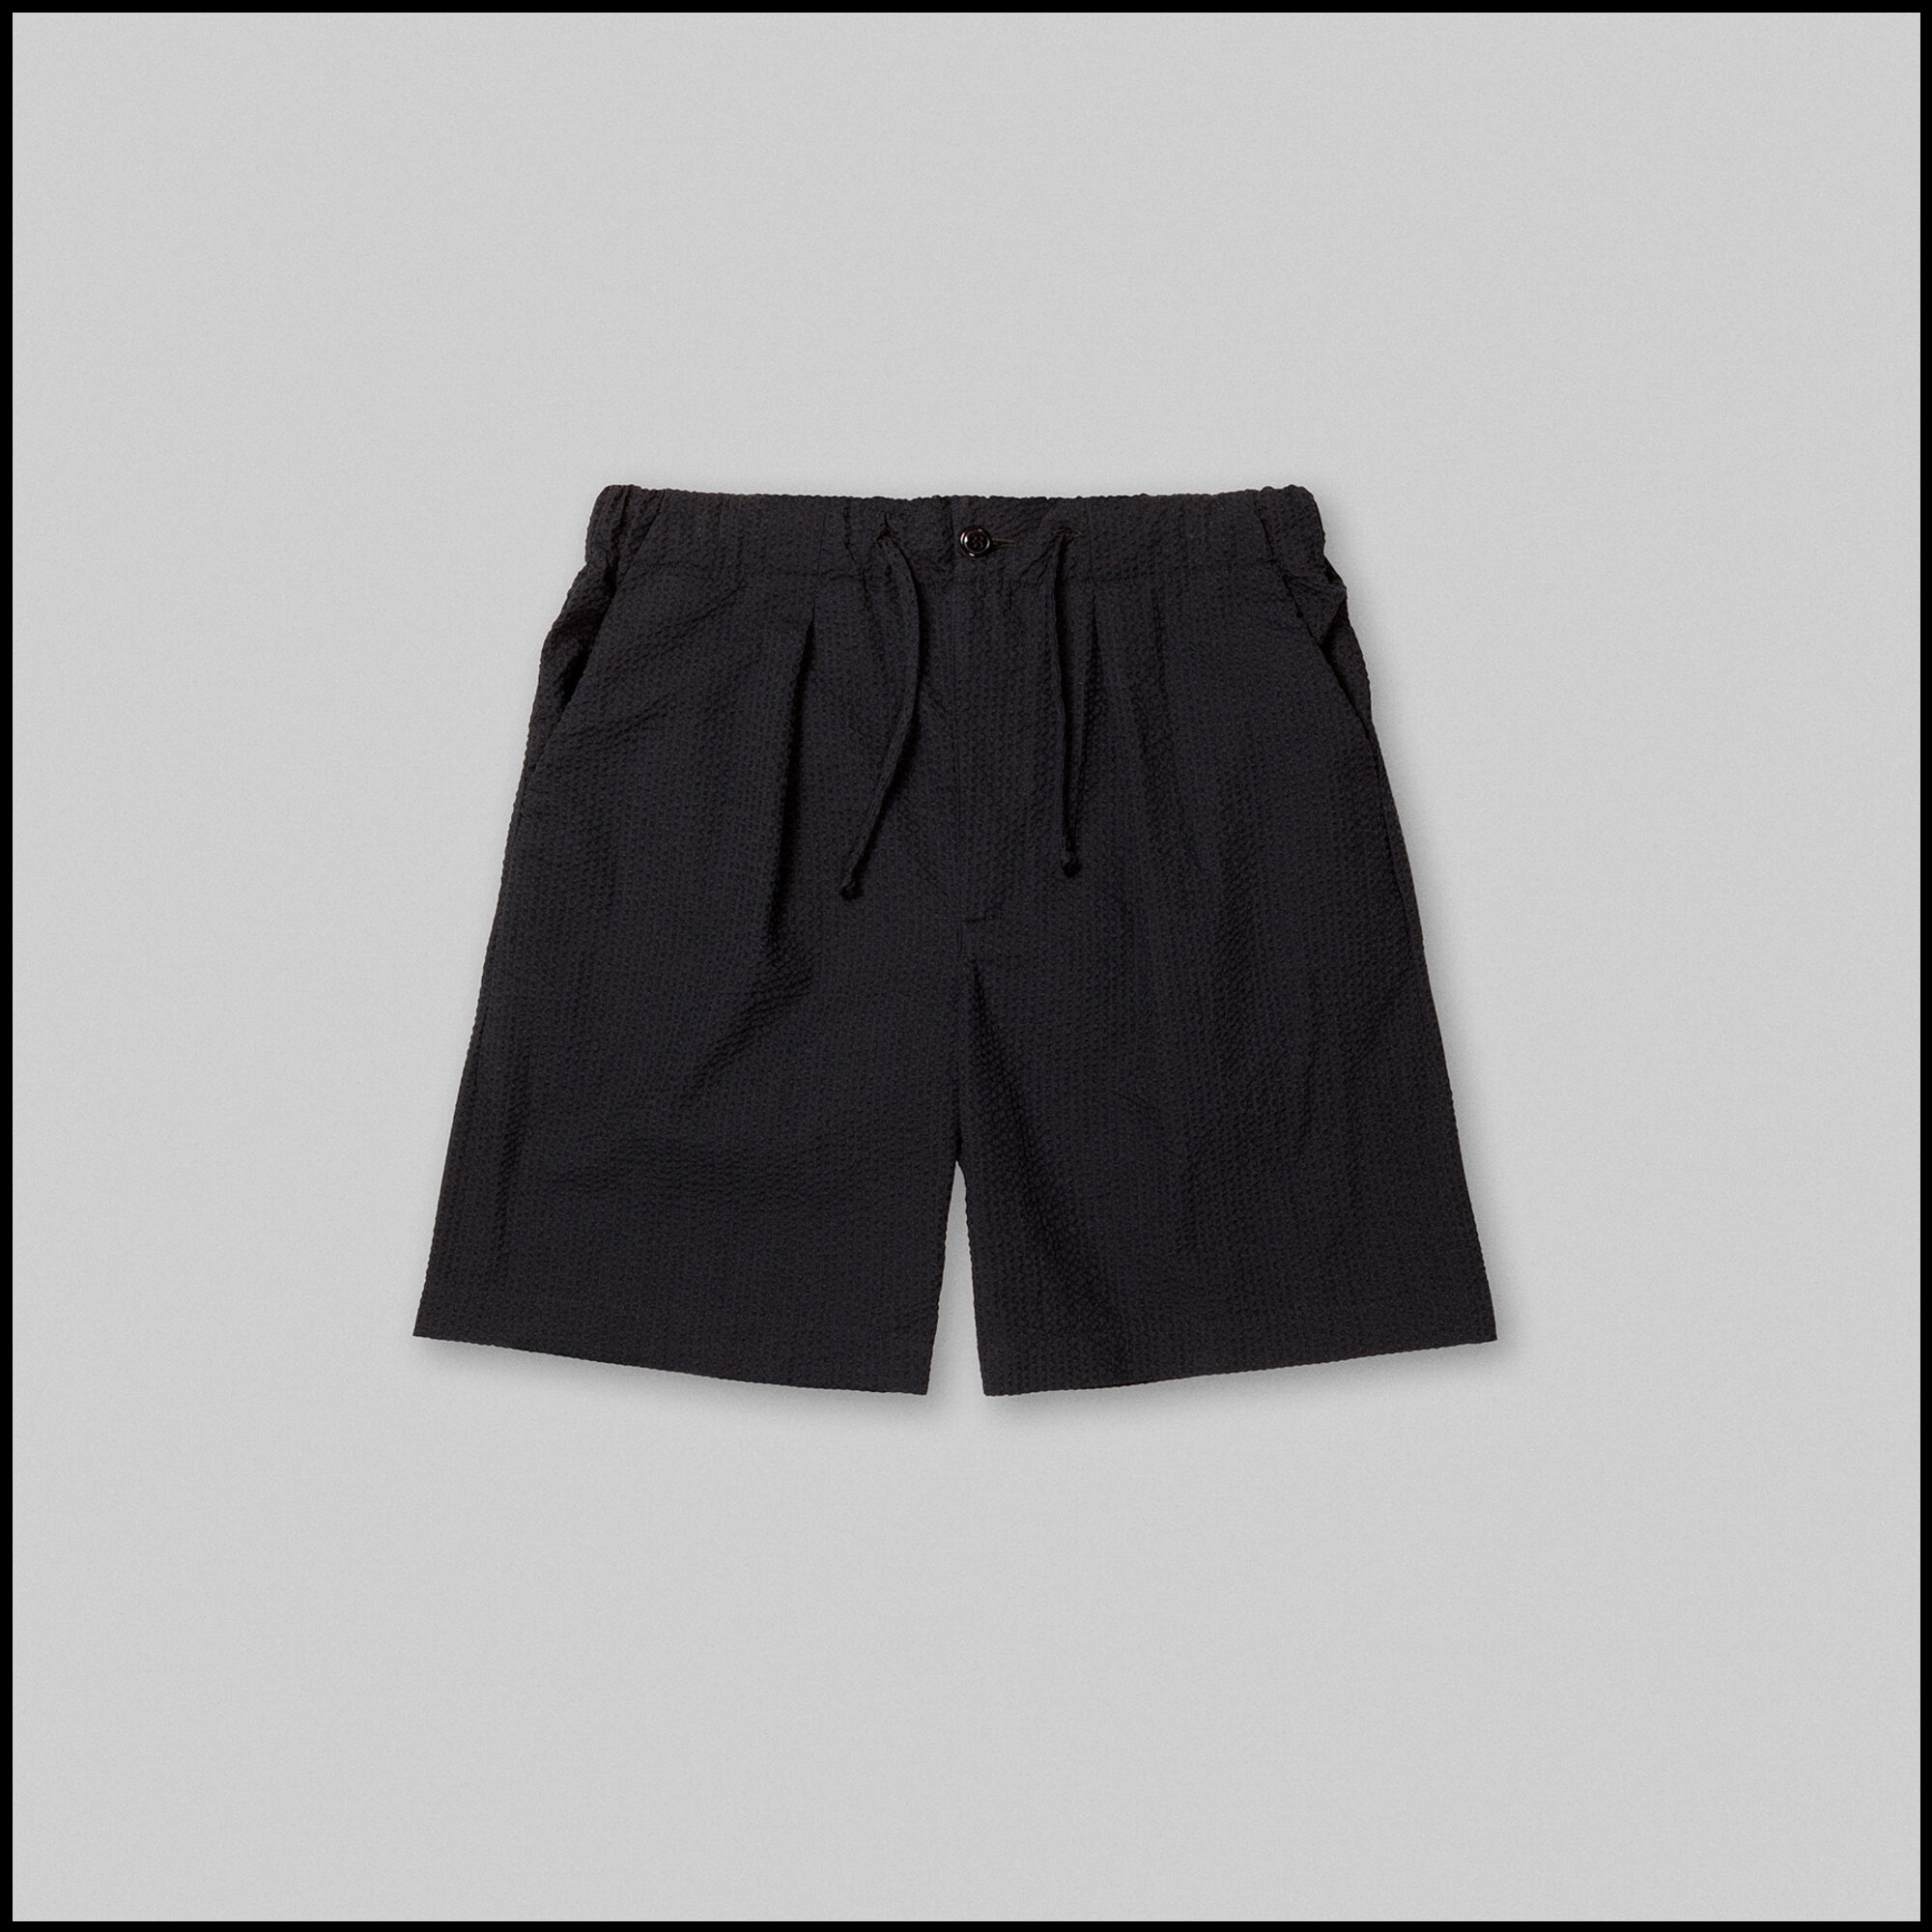 TERRA shorts by Arpenteur in Black seersucker color